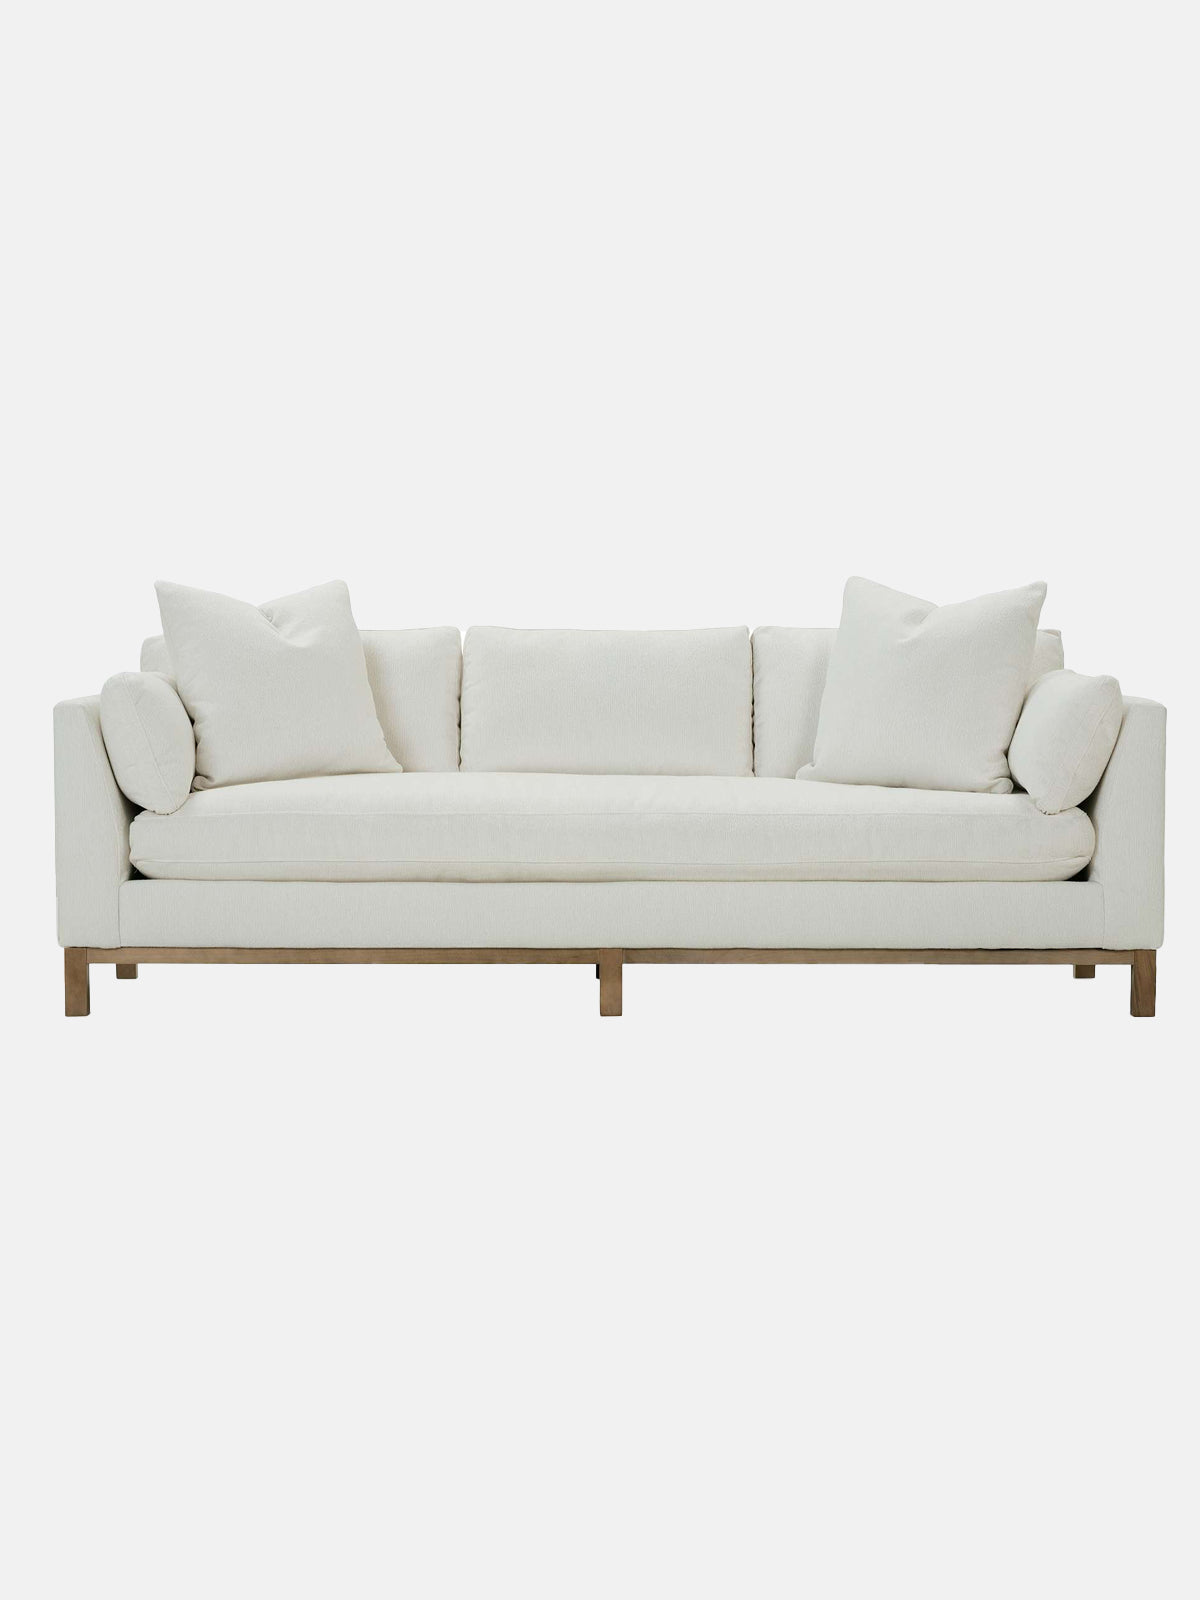 Boden Quick Ship Upholstered Sofa